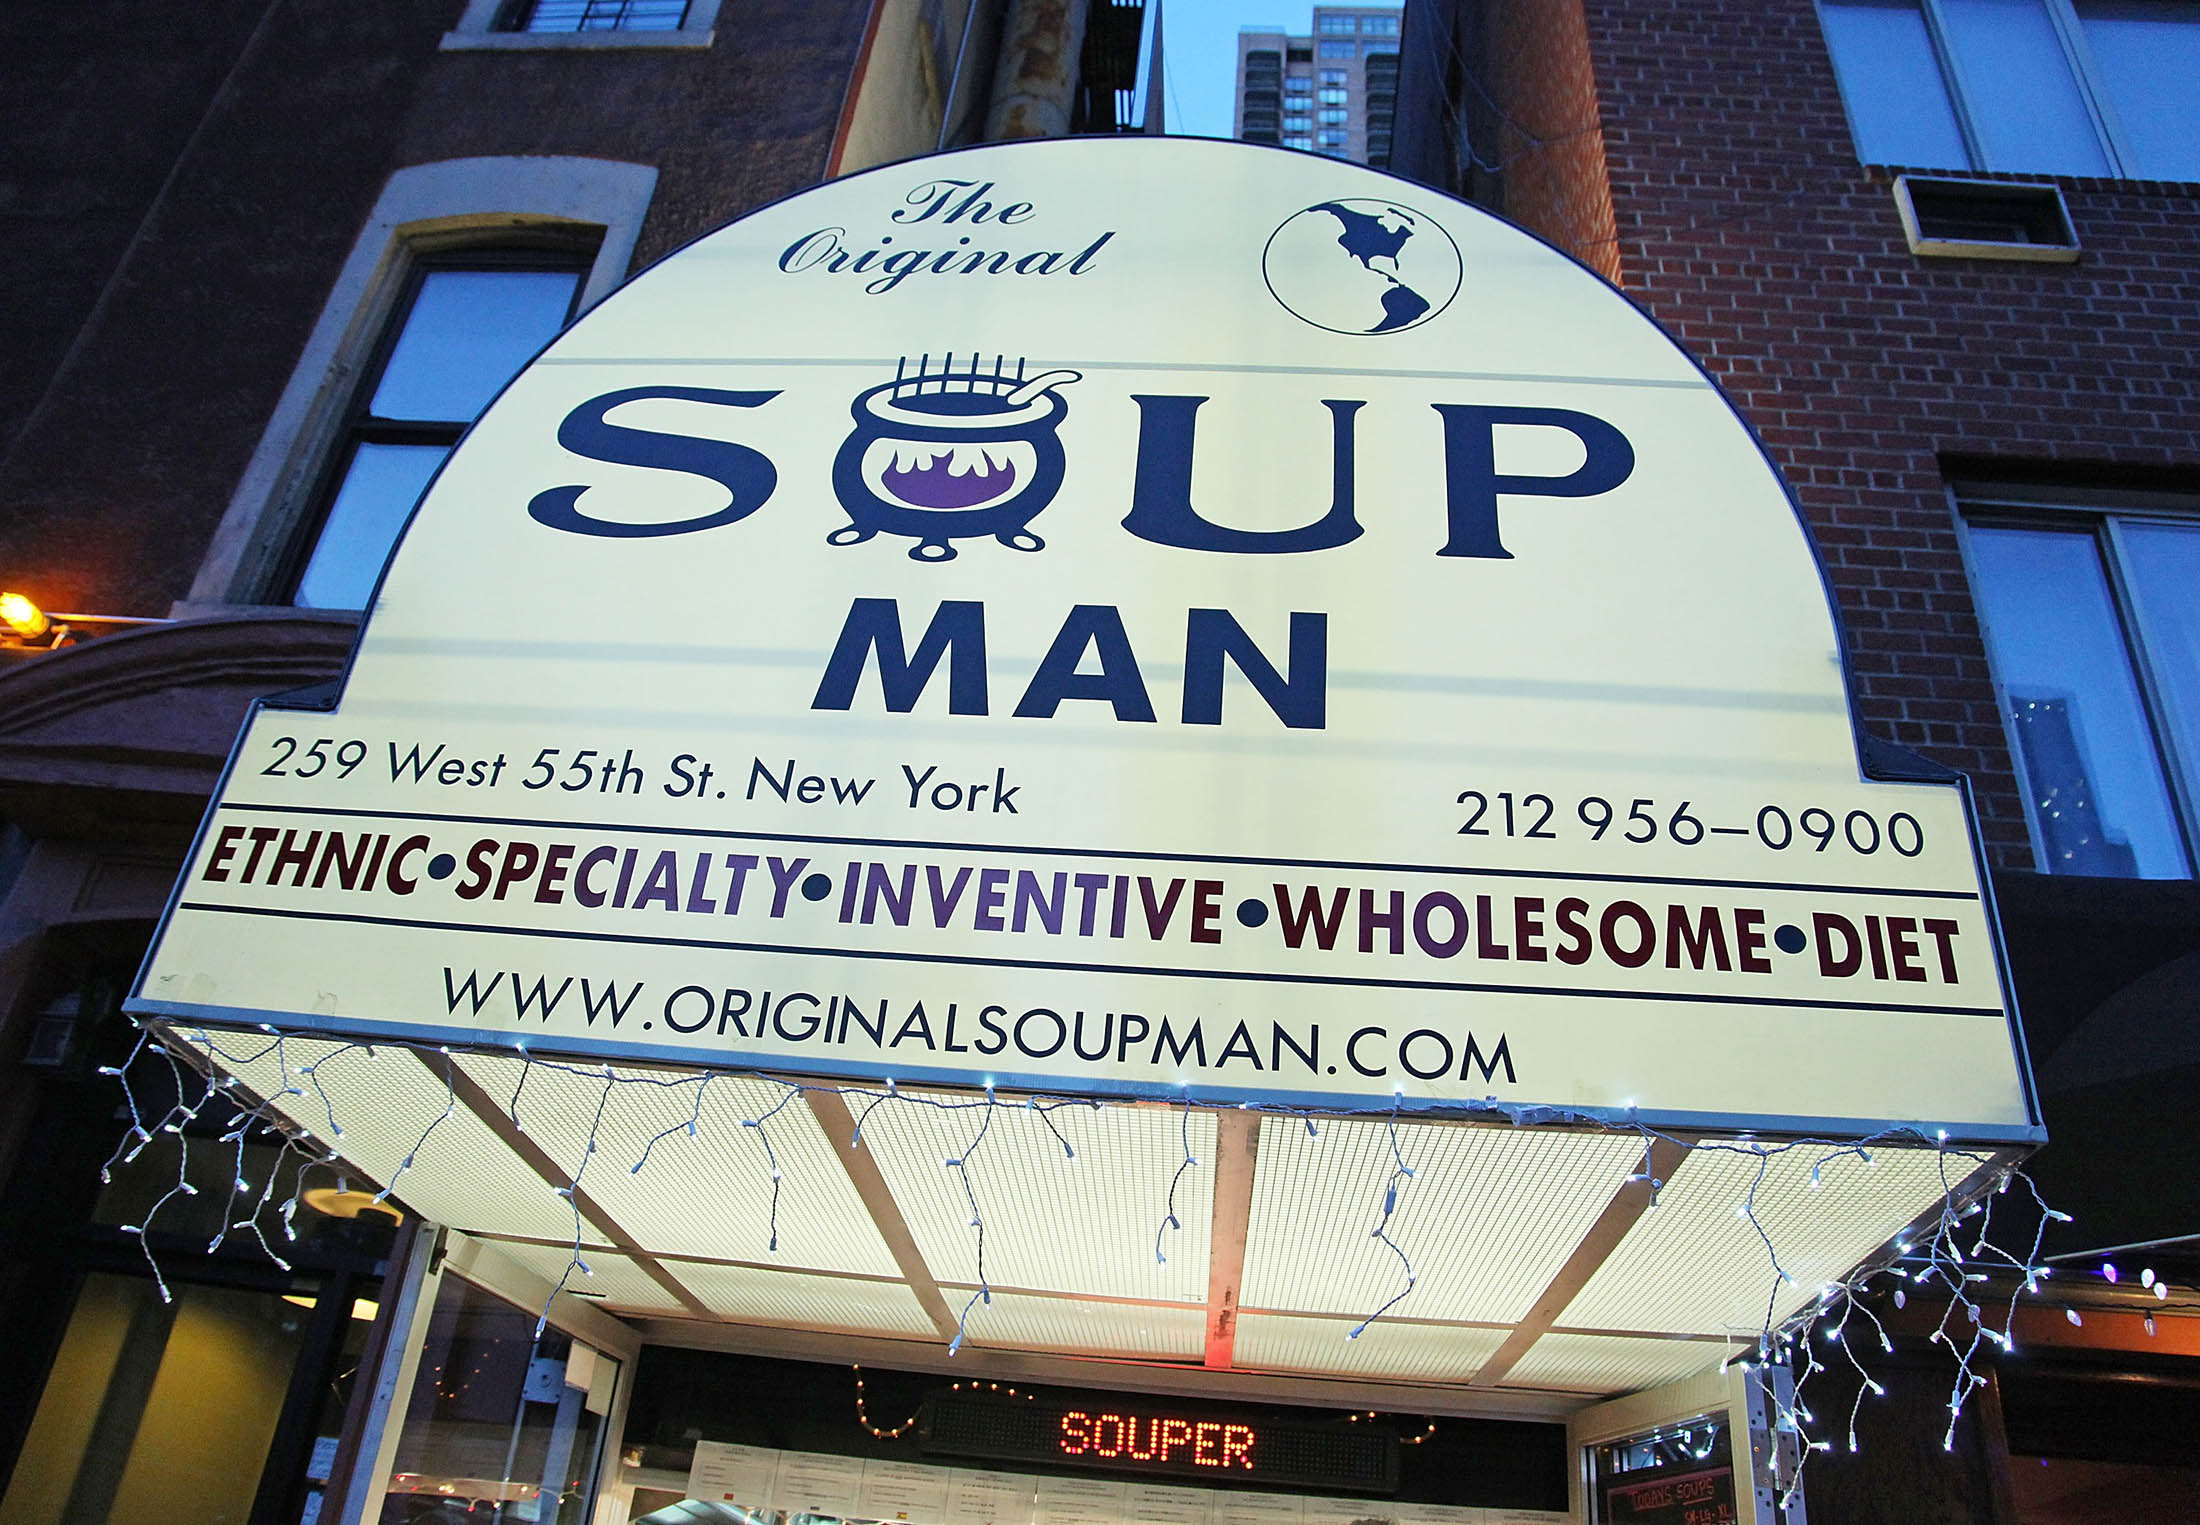 The Original Soupman in New York City.
